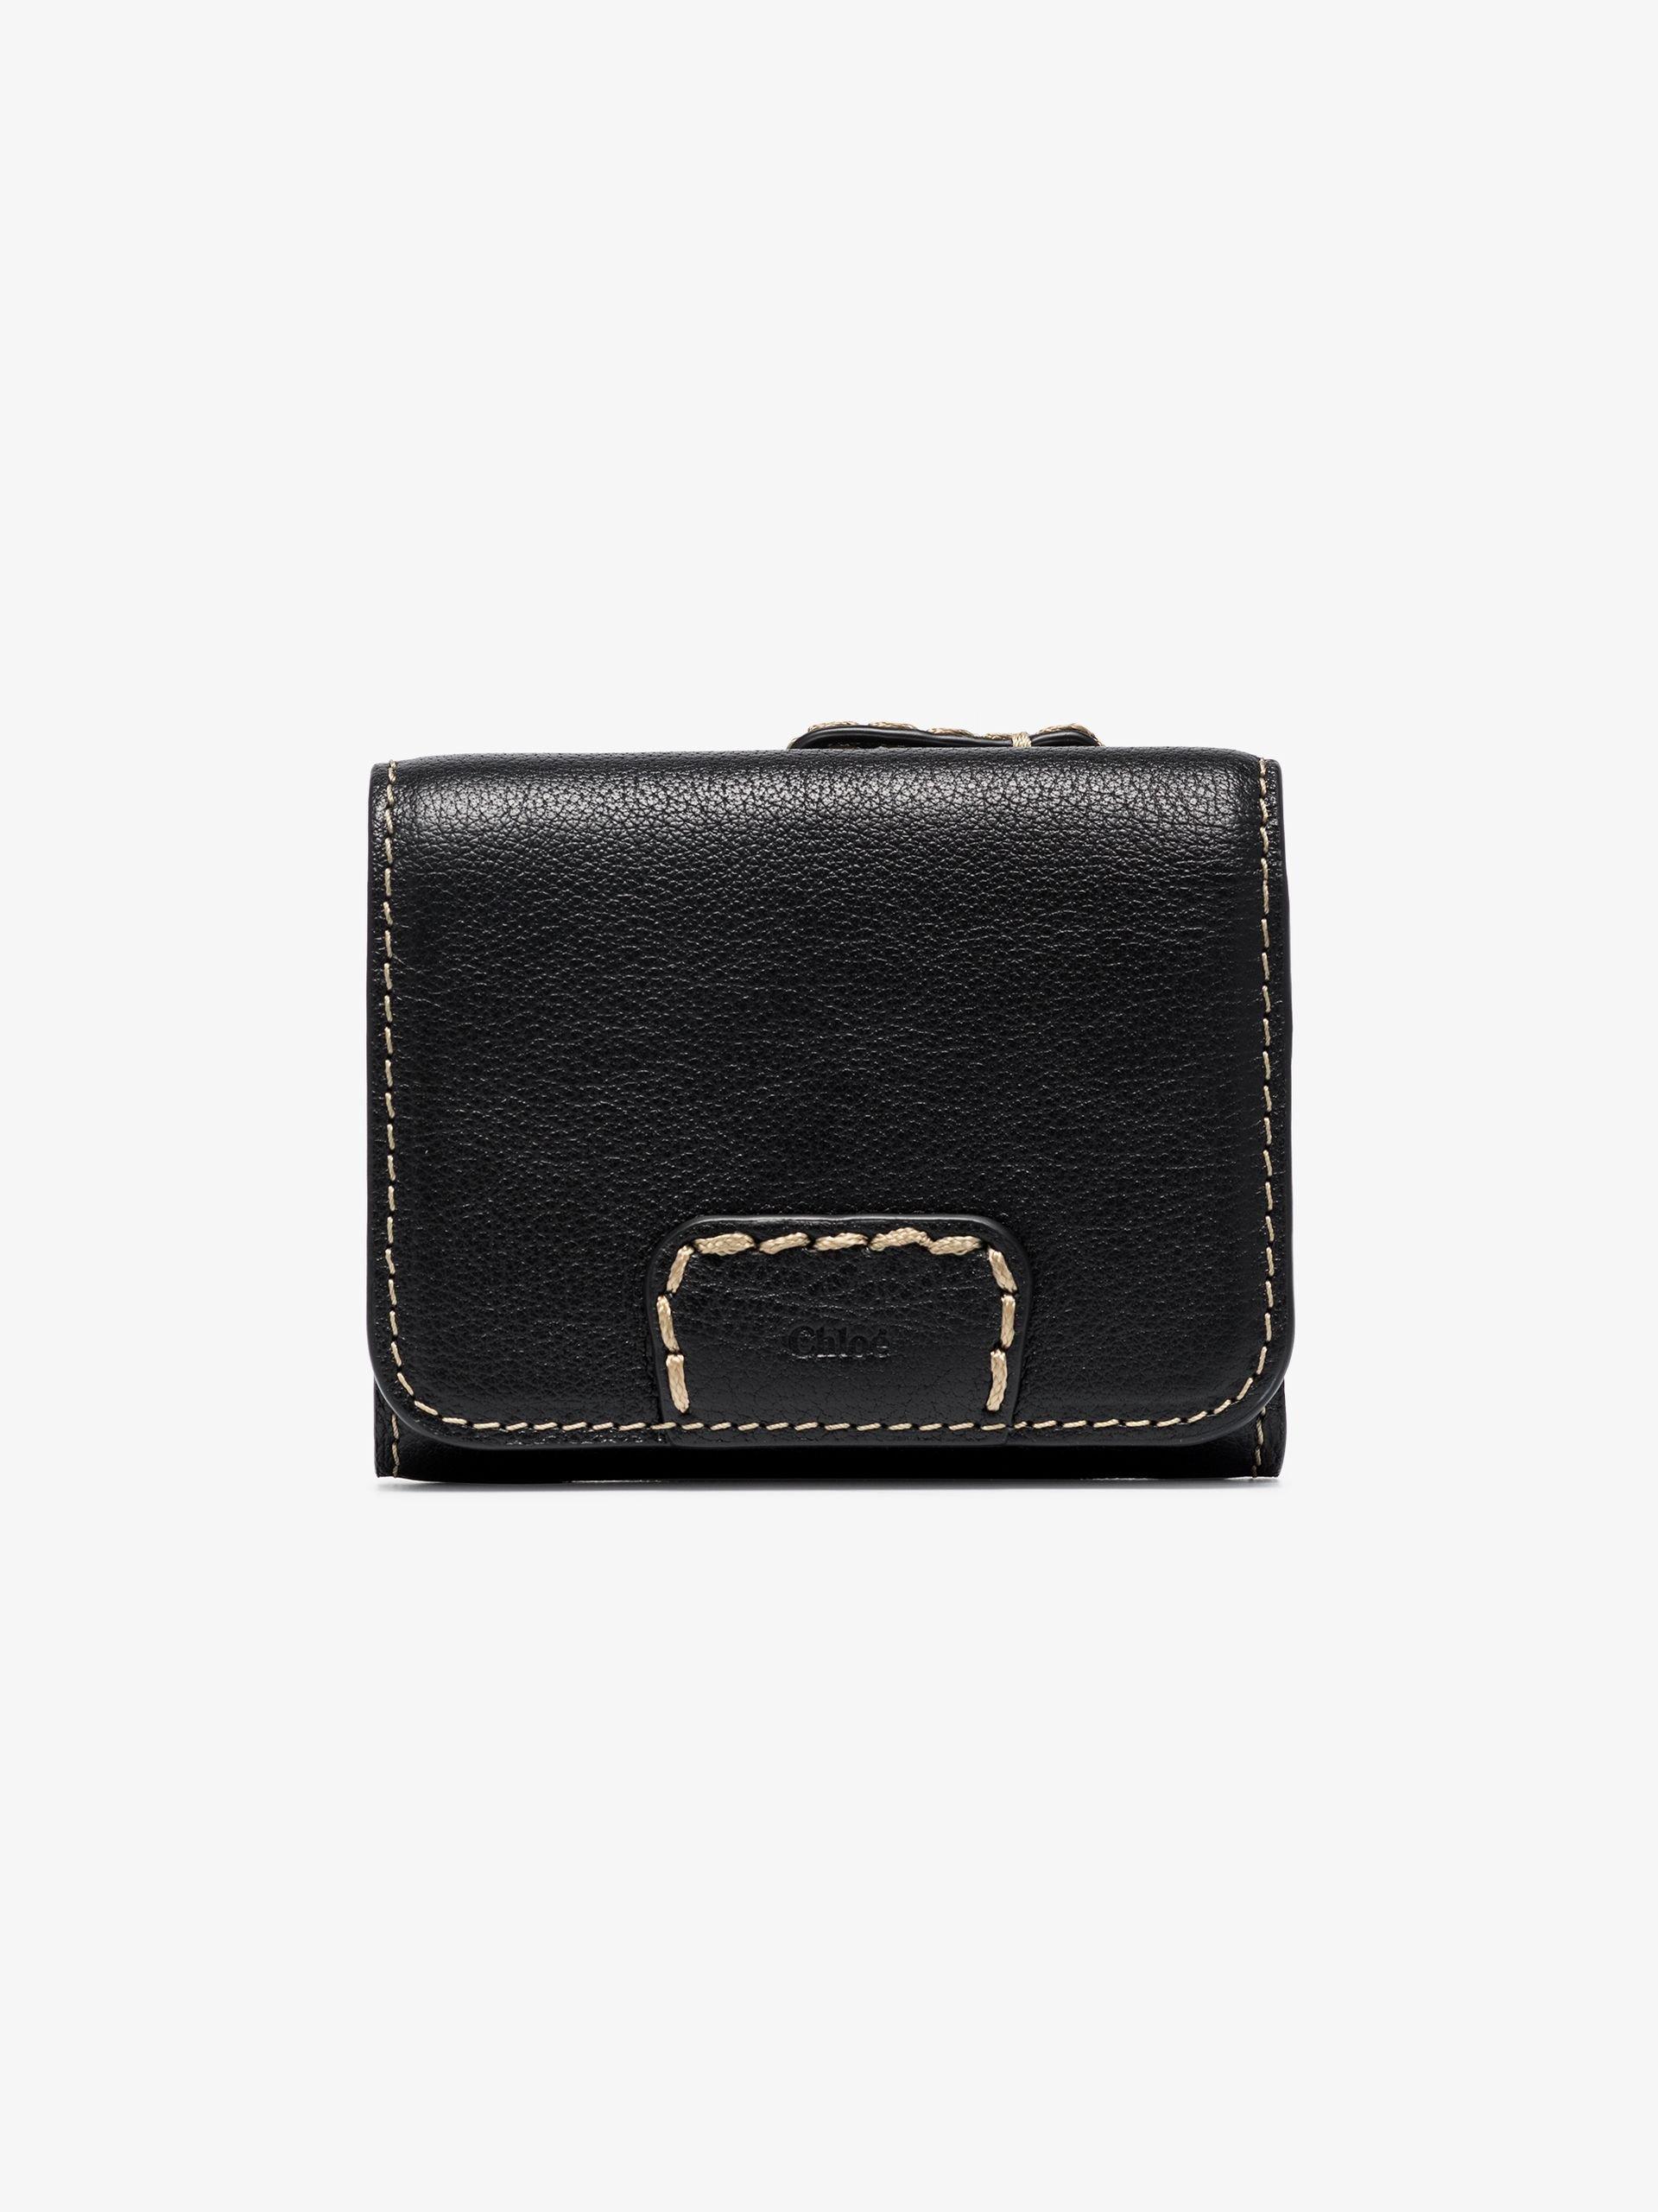 Chloé Edith Leather Wallet in Black | Lyst